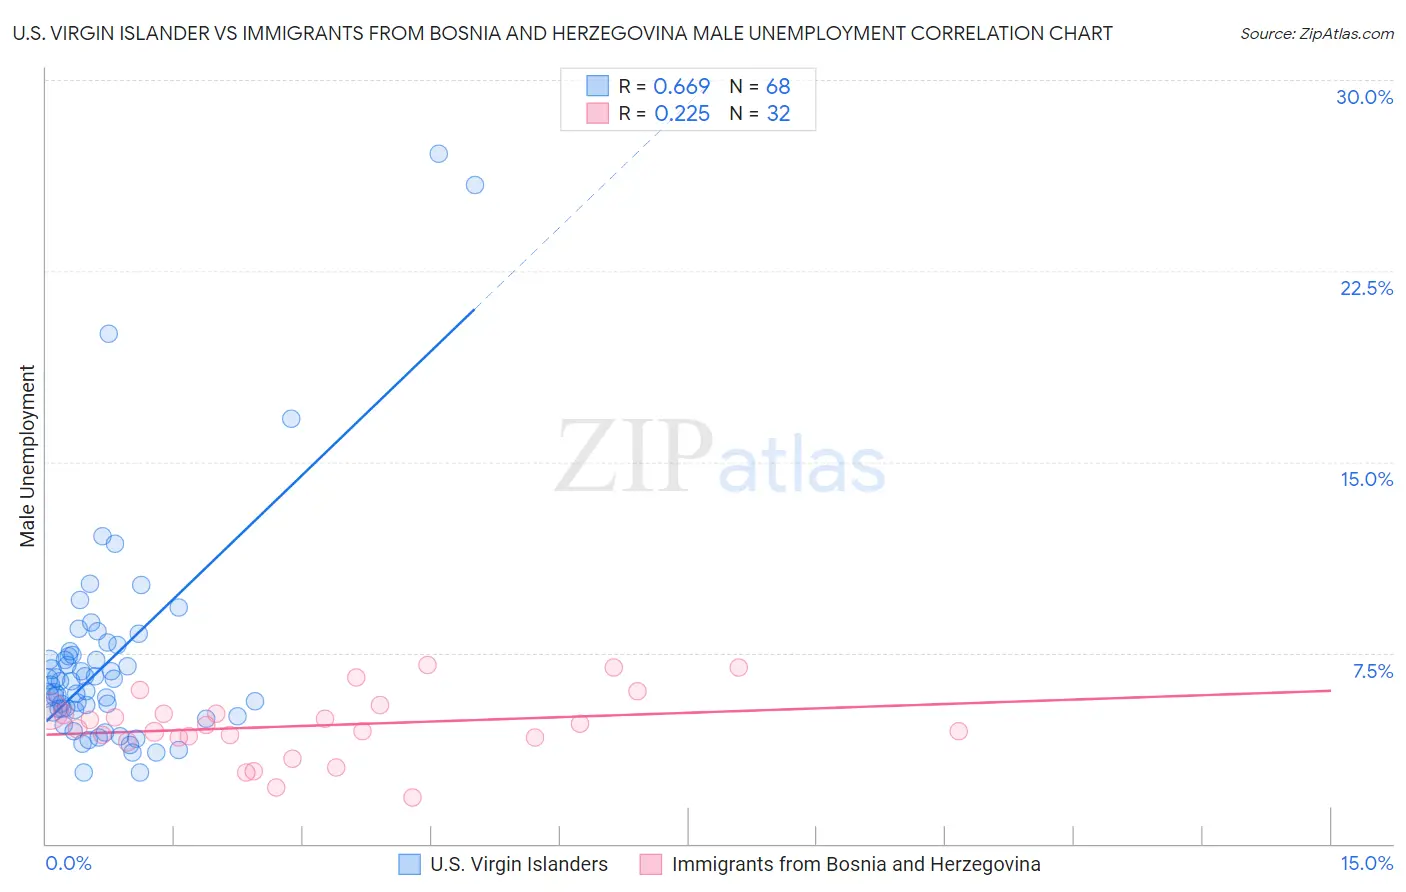 U.S. Virgin Islander vs Immigrants from Bosnia and Herzegovina Male Unemployment